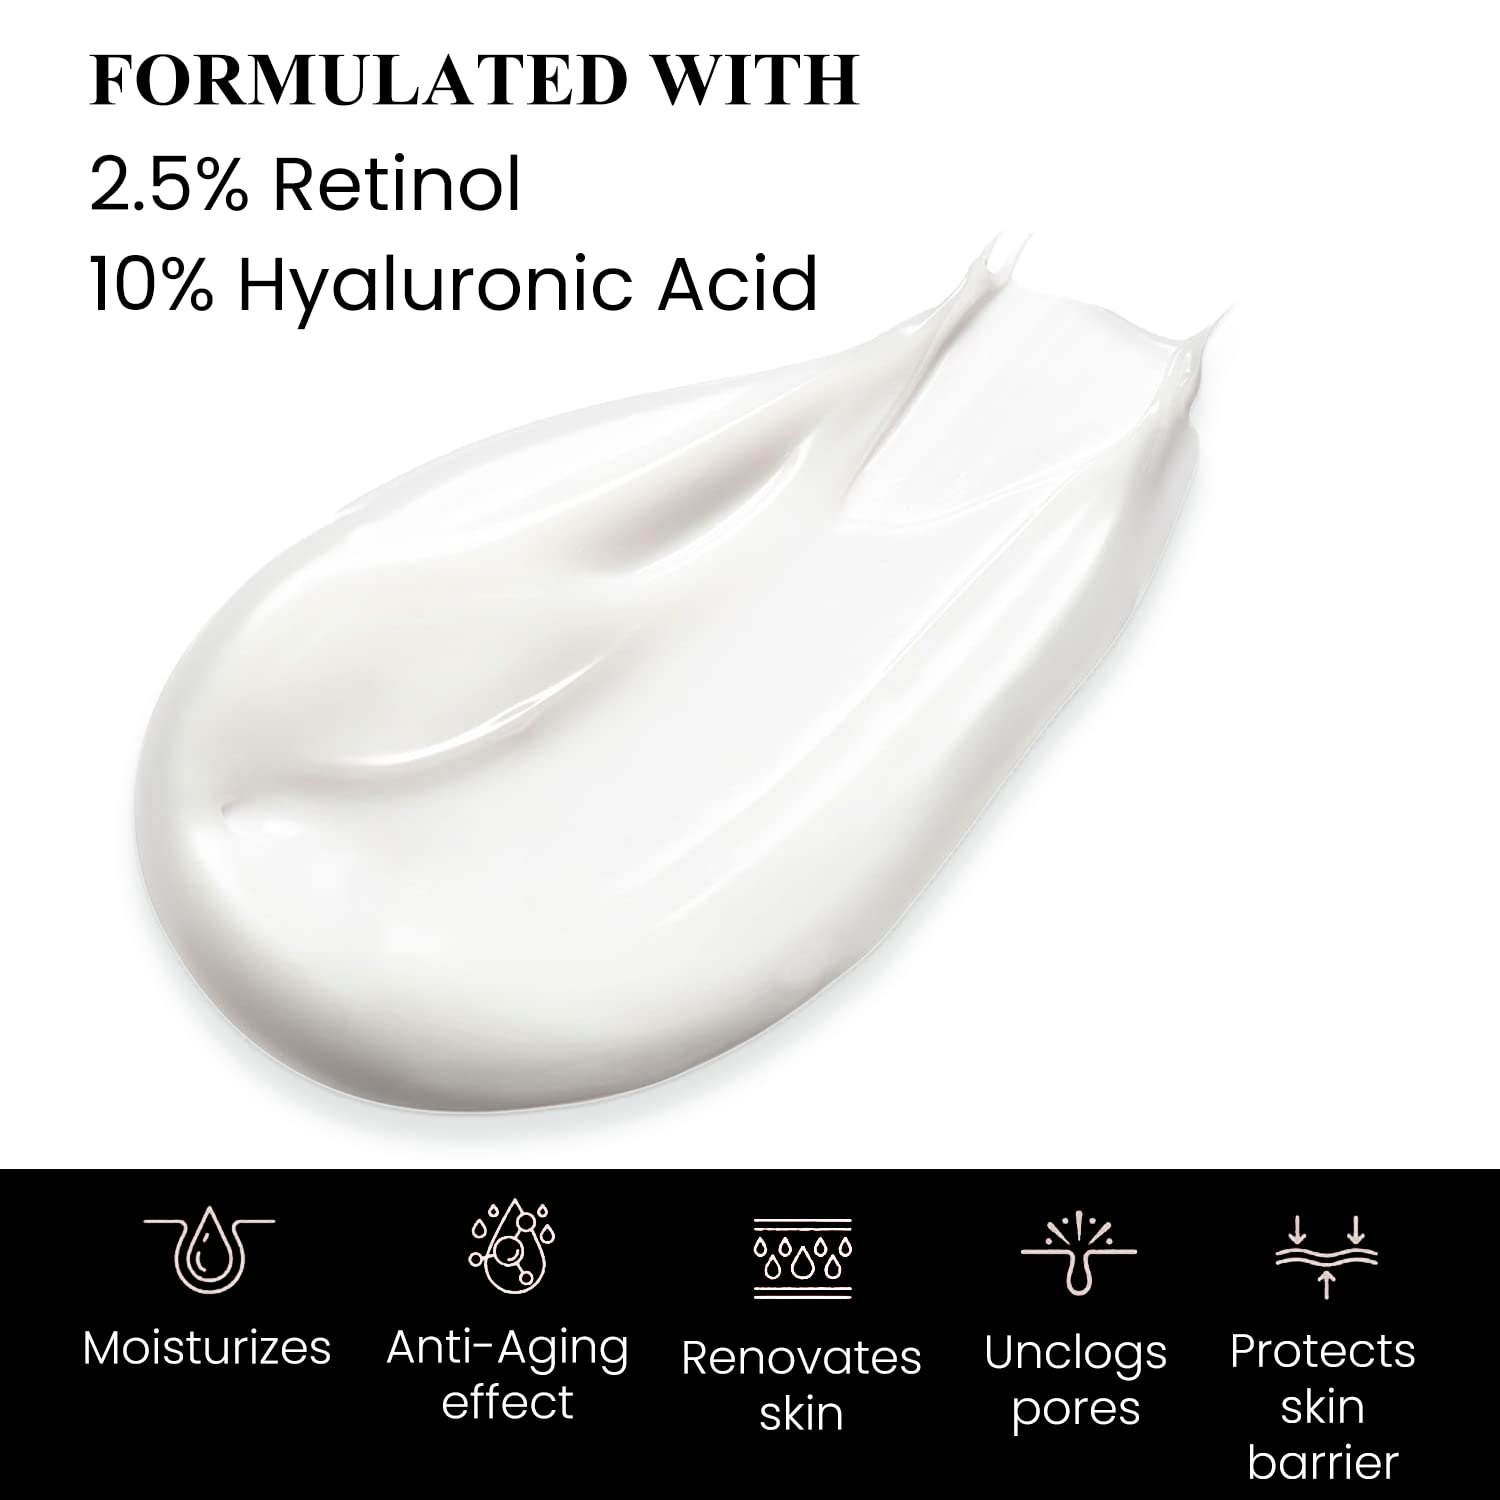 Kleem Organics Retinol Cream for Face - Anti Aging Face Cream with Hyaluronic Acid & Collagen - Retinol Face Moisturizer for Wrinkles, Dark Spots, and Uneven Skin Texture - Crema Retinol Para La Cara